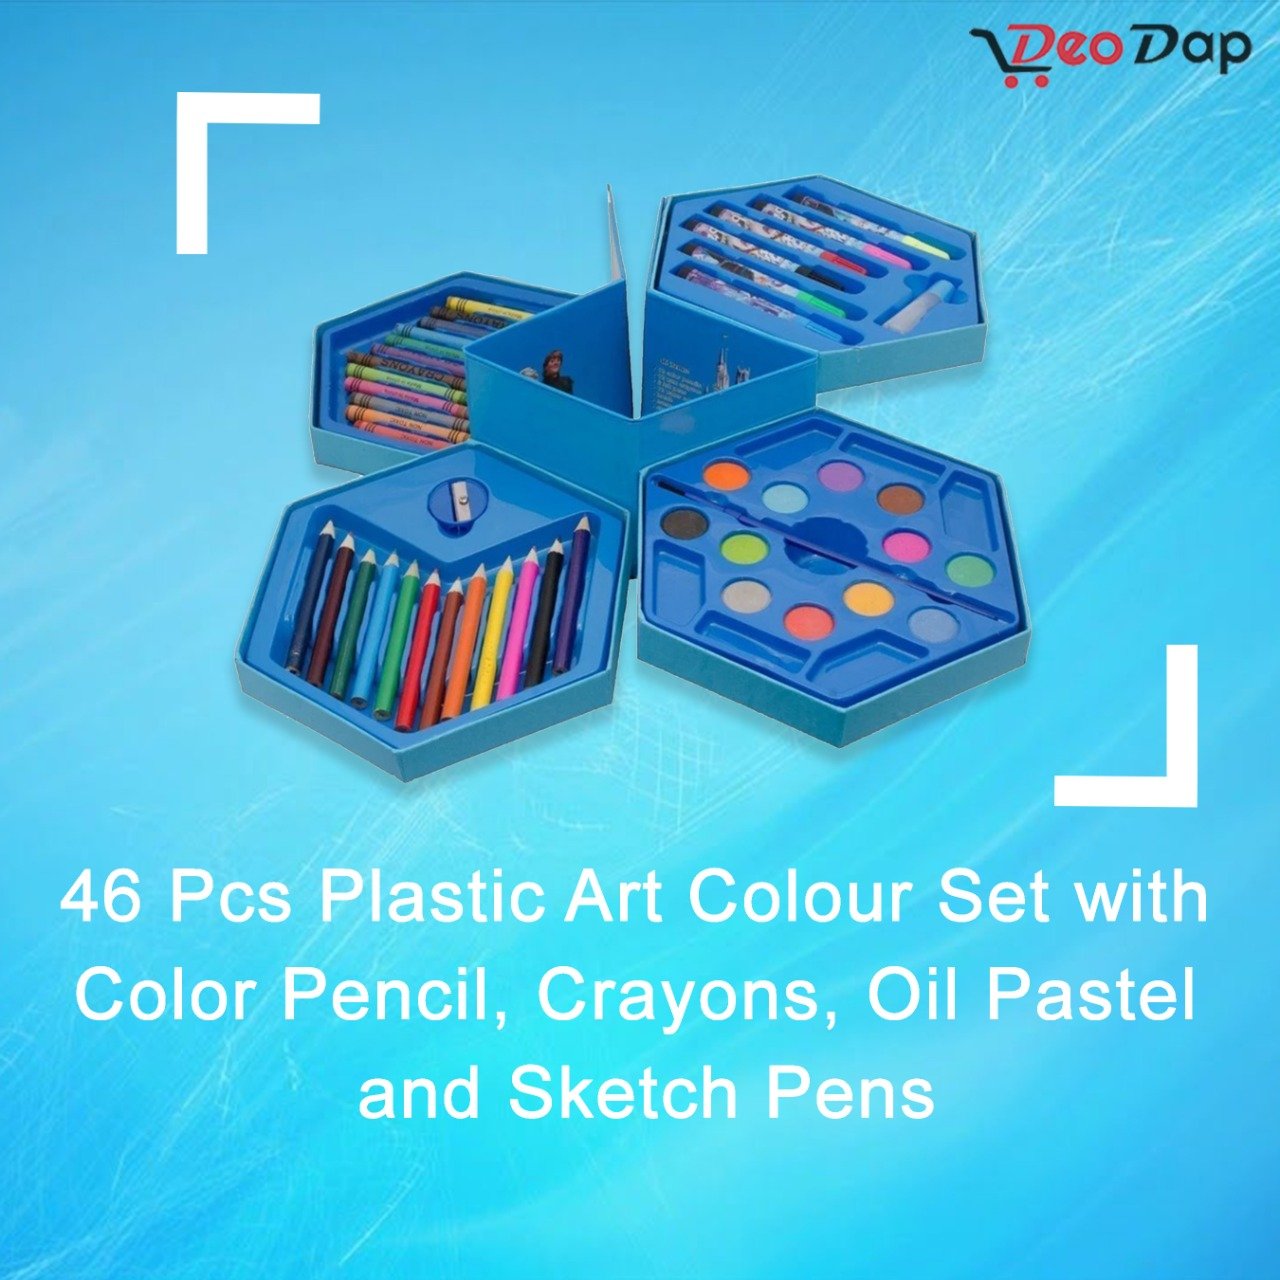 0859 46 Pcs Plastic Art Colour Set with Color Pencil, Crayons, Oil Pastel and Sketch Pens - SkyShopy